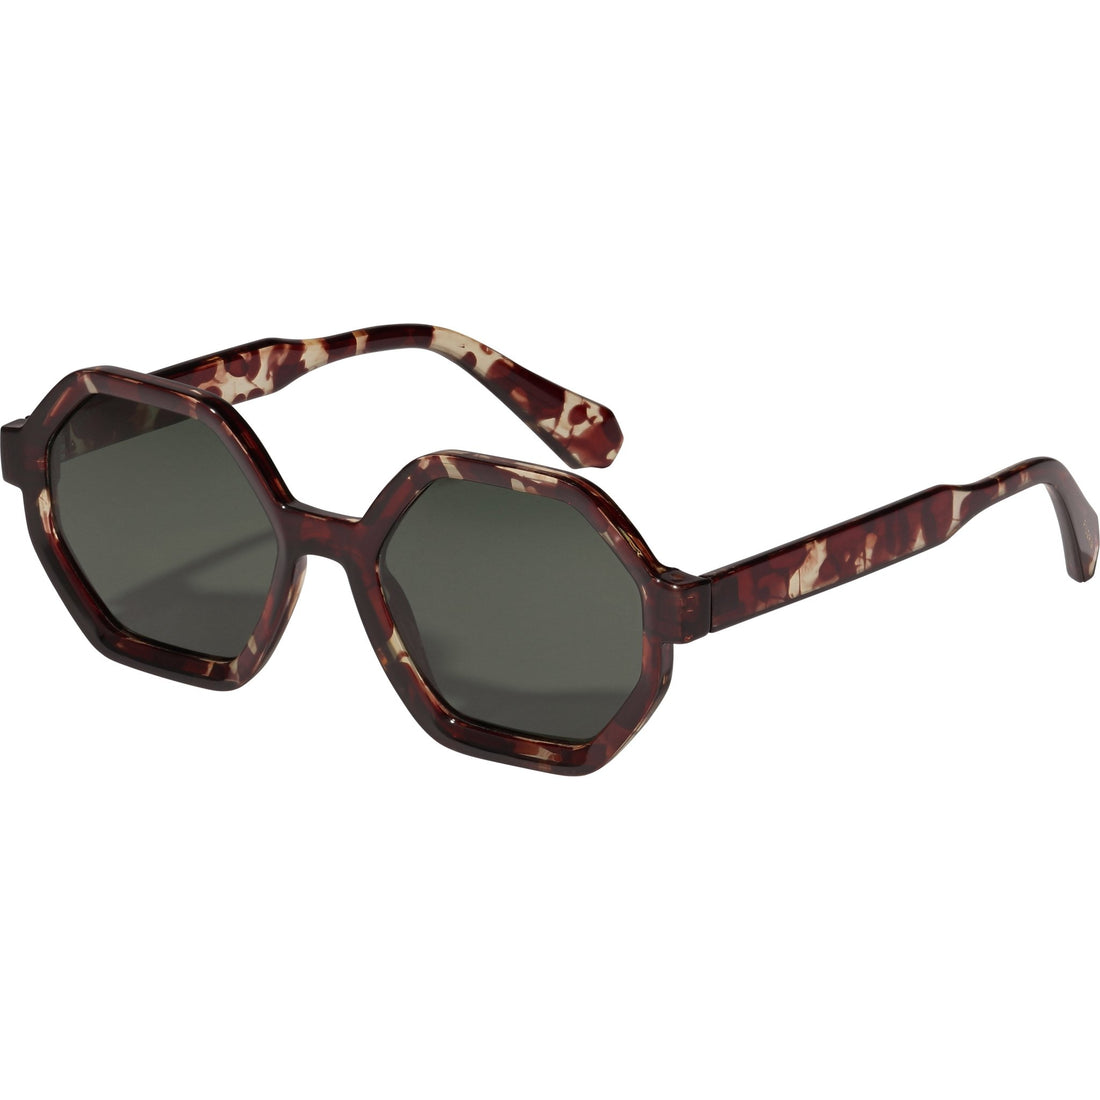 KIMANI recycled sunglasses tortoise brown - PILGRIM